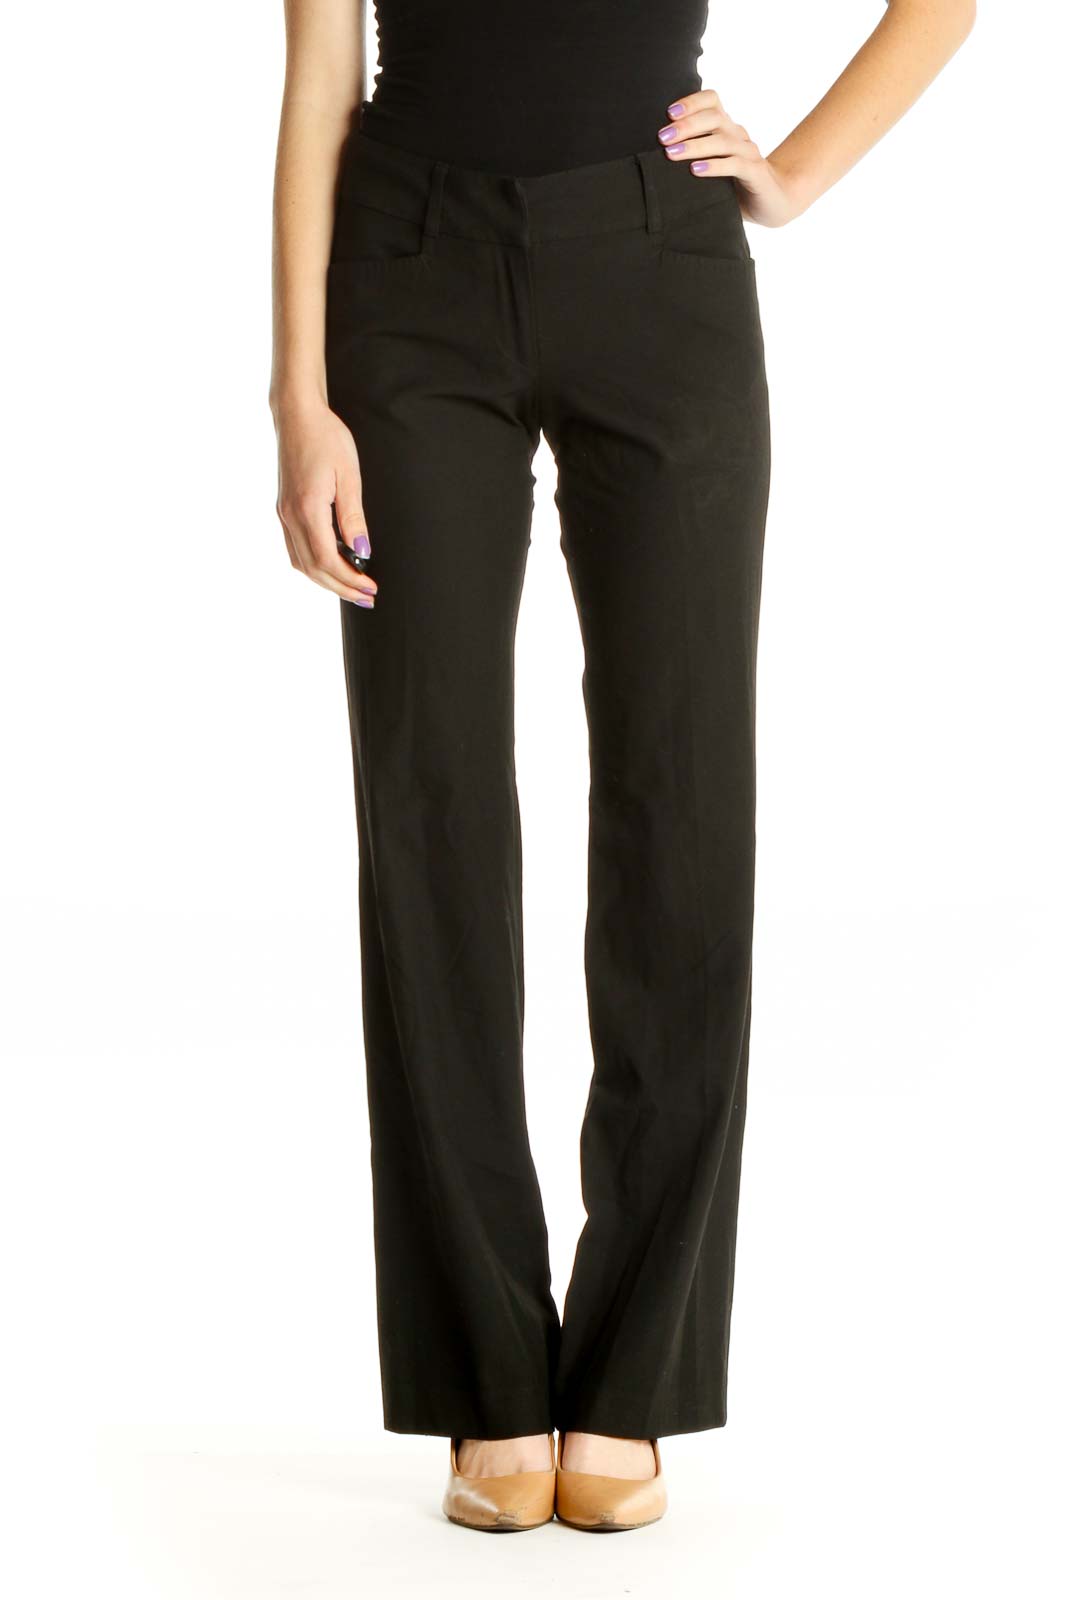 Buy Black Trousers & Pants for Men by Michael Kors Online | Ajio.com